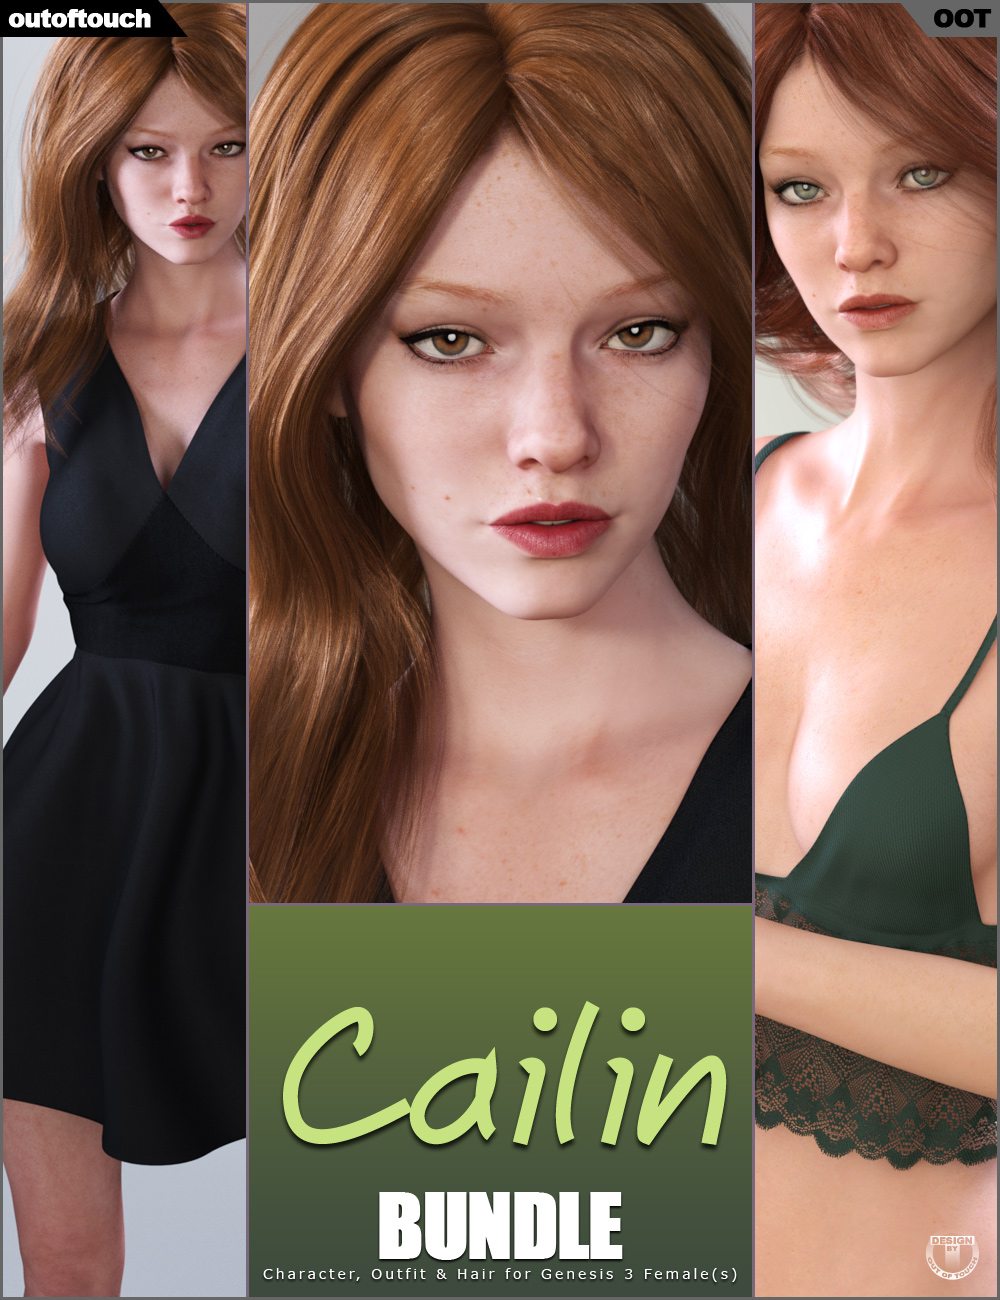 Cailin Bundle by: outoftouchRaiya, 3D Models by Daz 3D